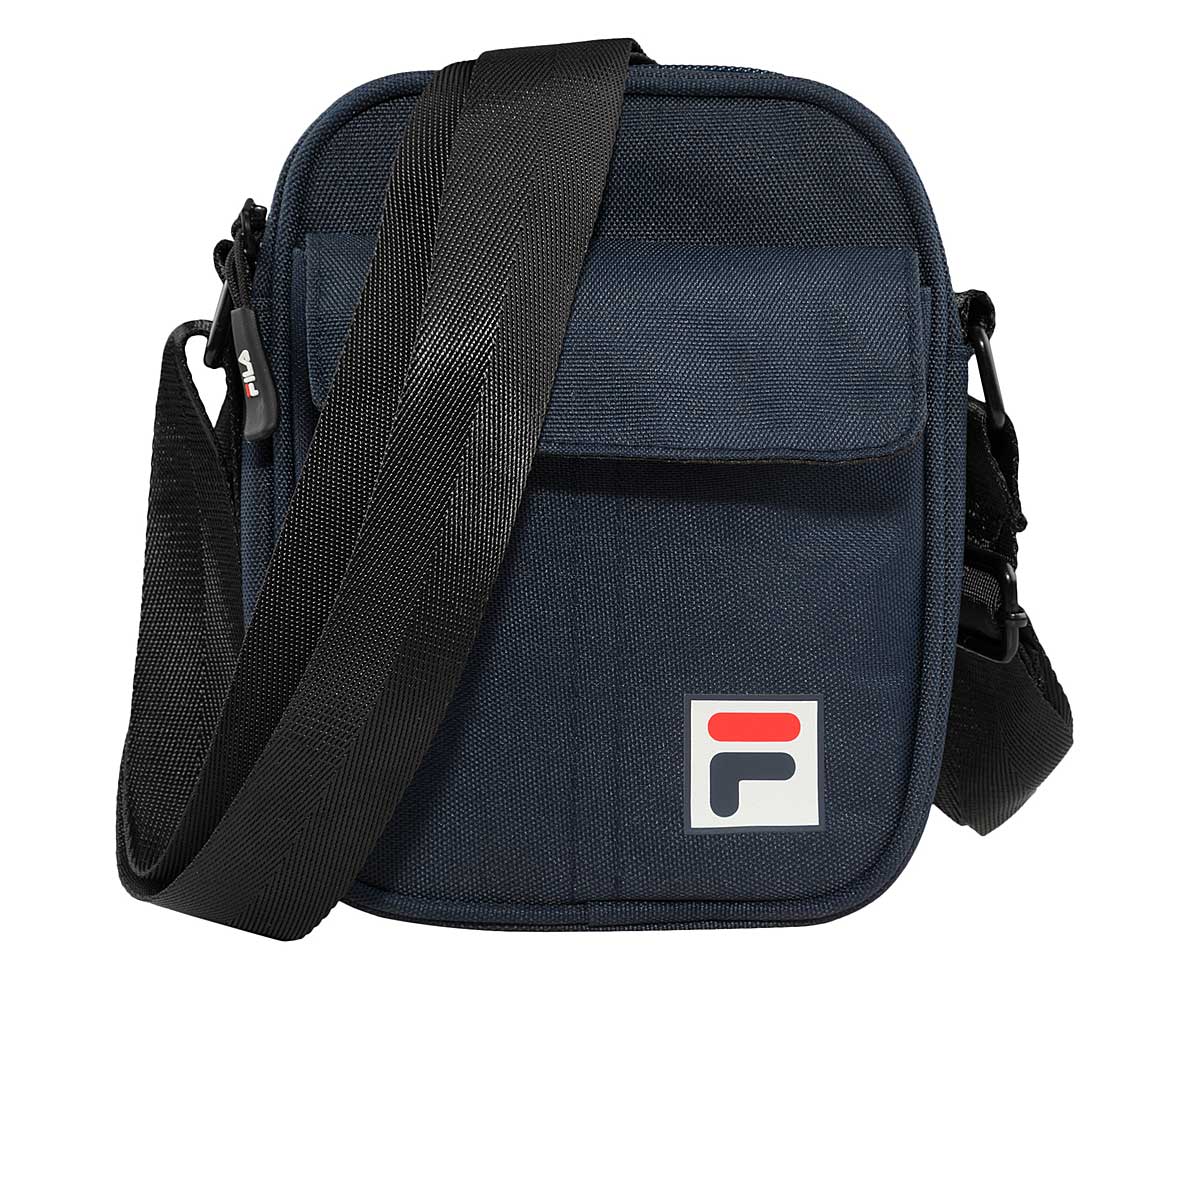 Buy Urban Line Pusher Bag Milan black for EUR 14.90 KICKZ.com!